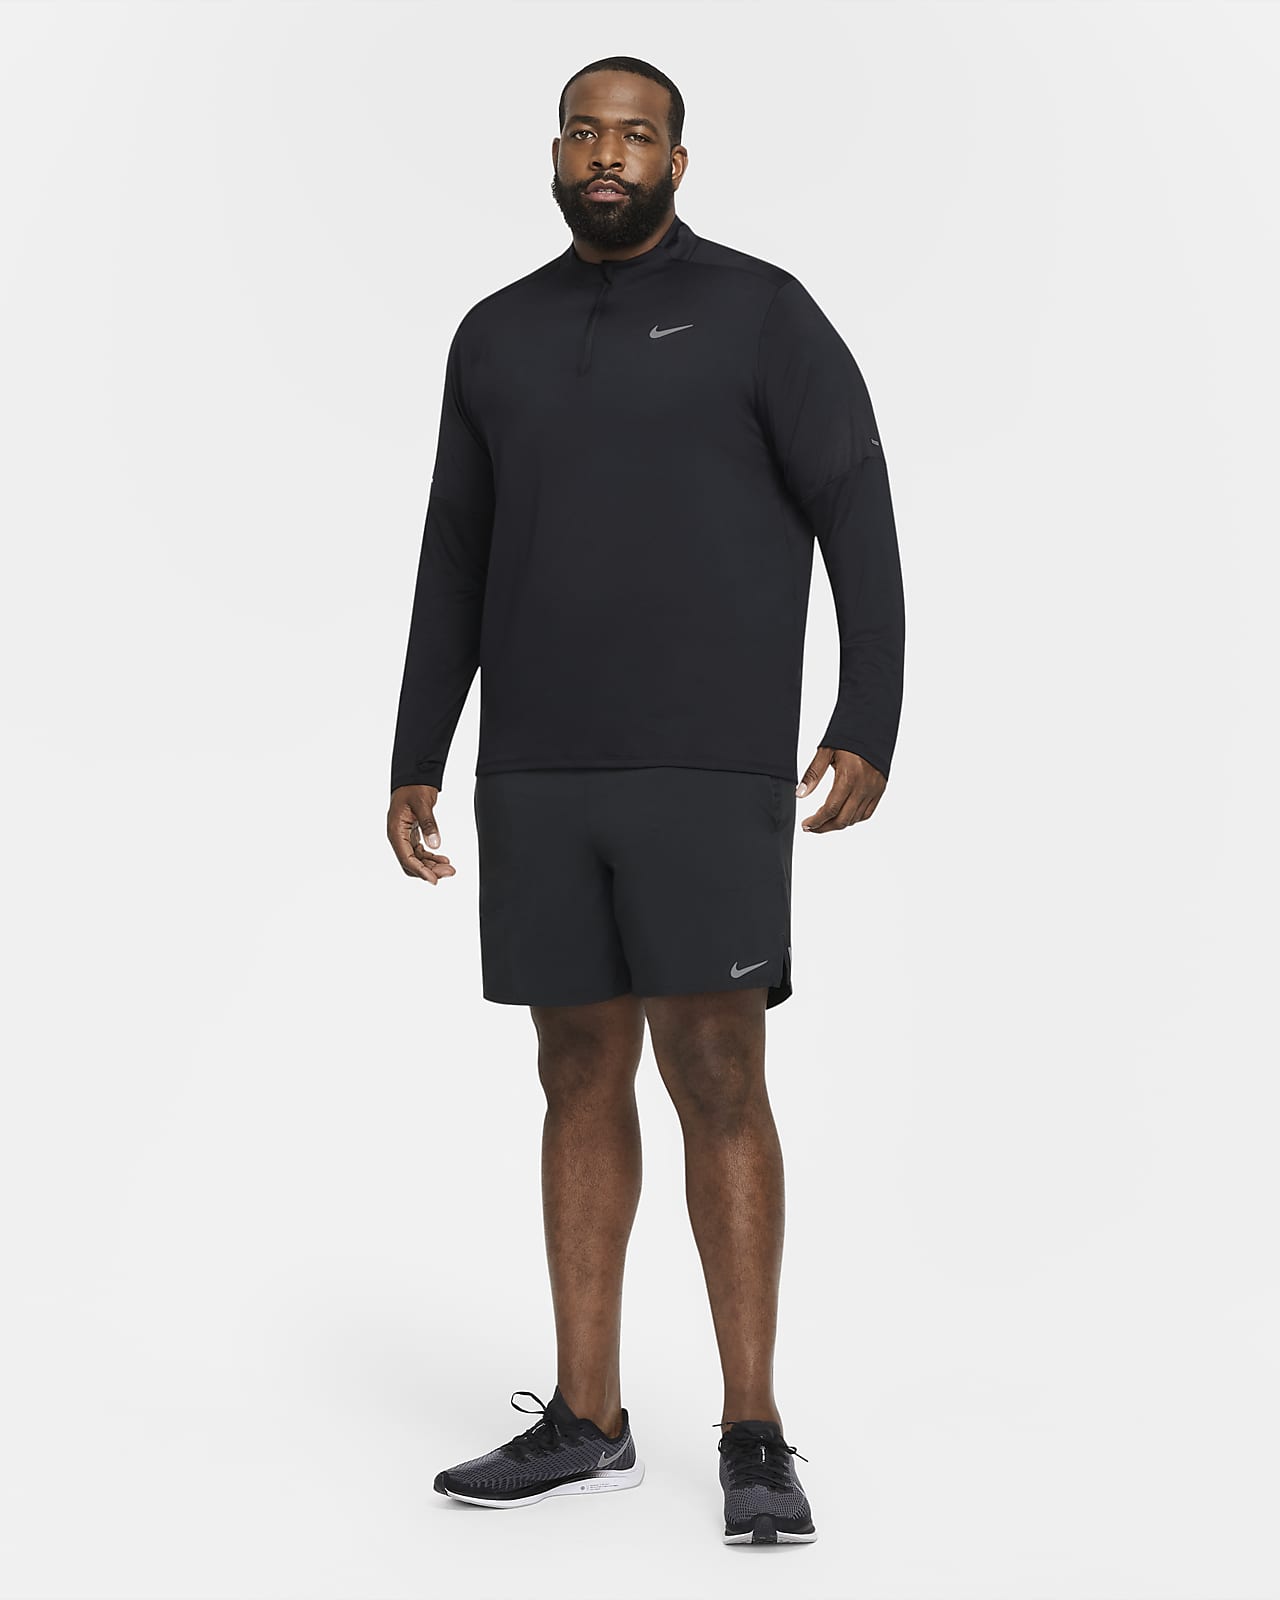 Nike Element Men's Dri-FIT 1/2-Zip Running Top.